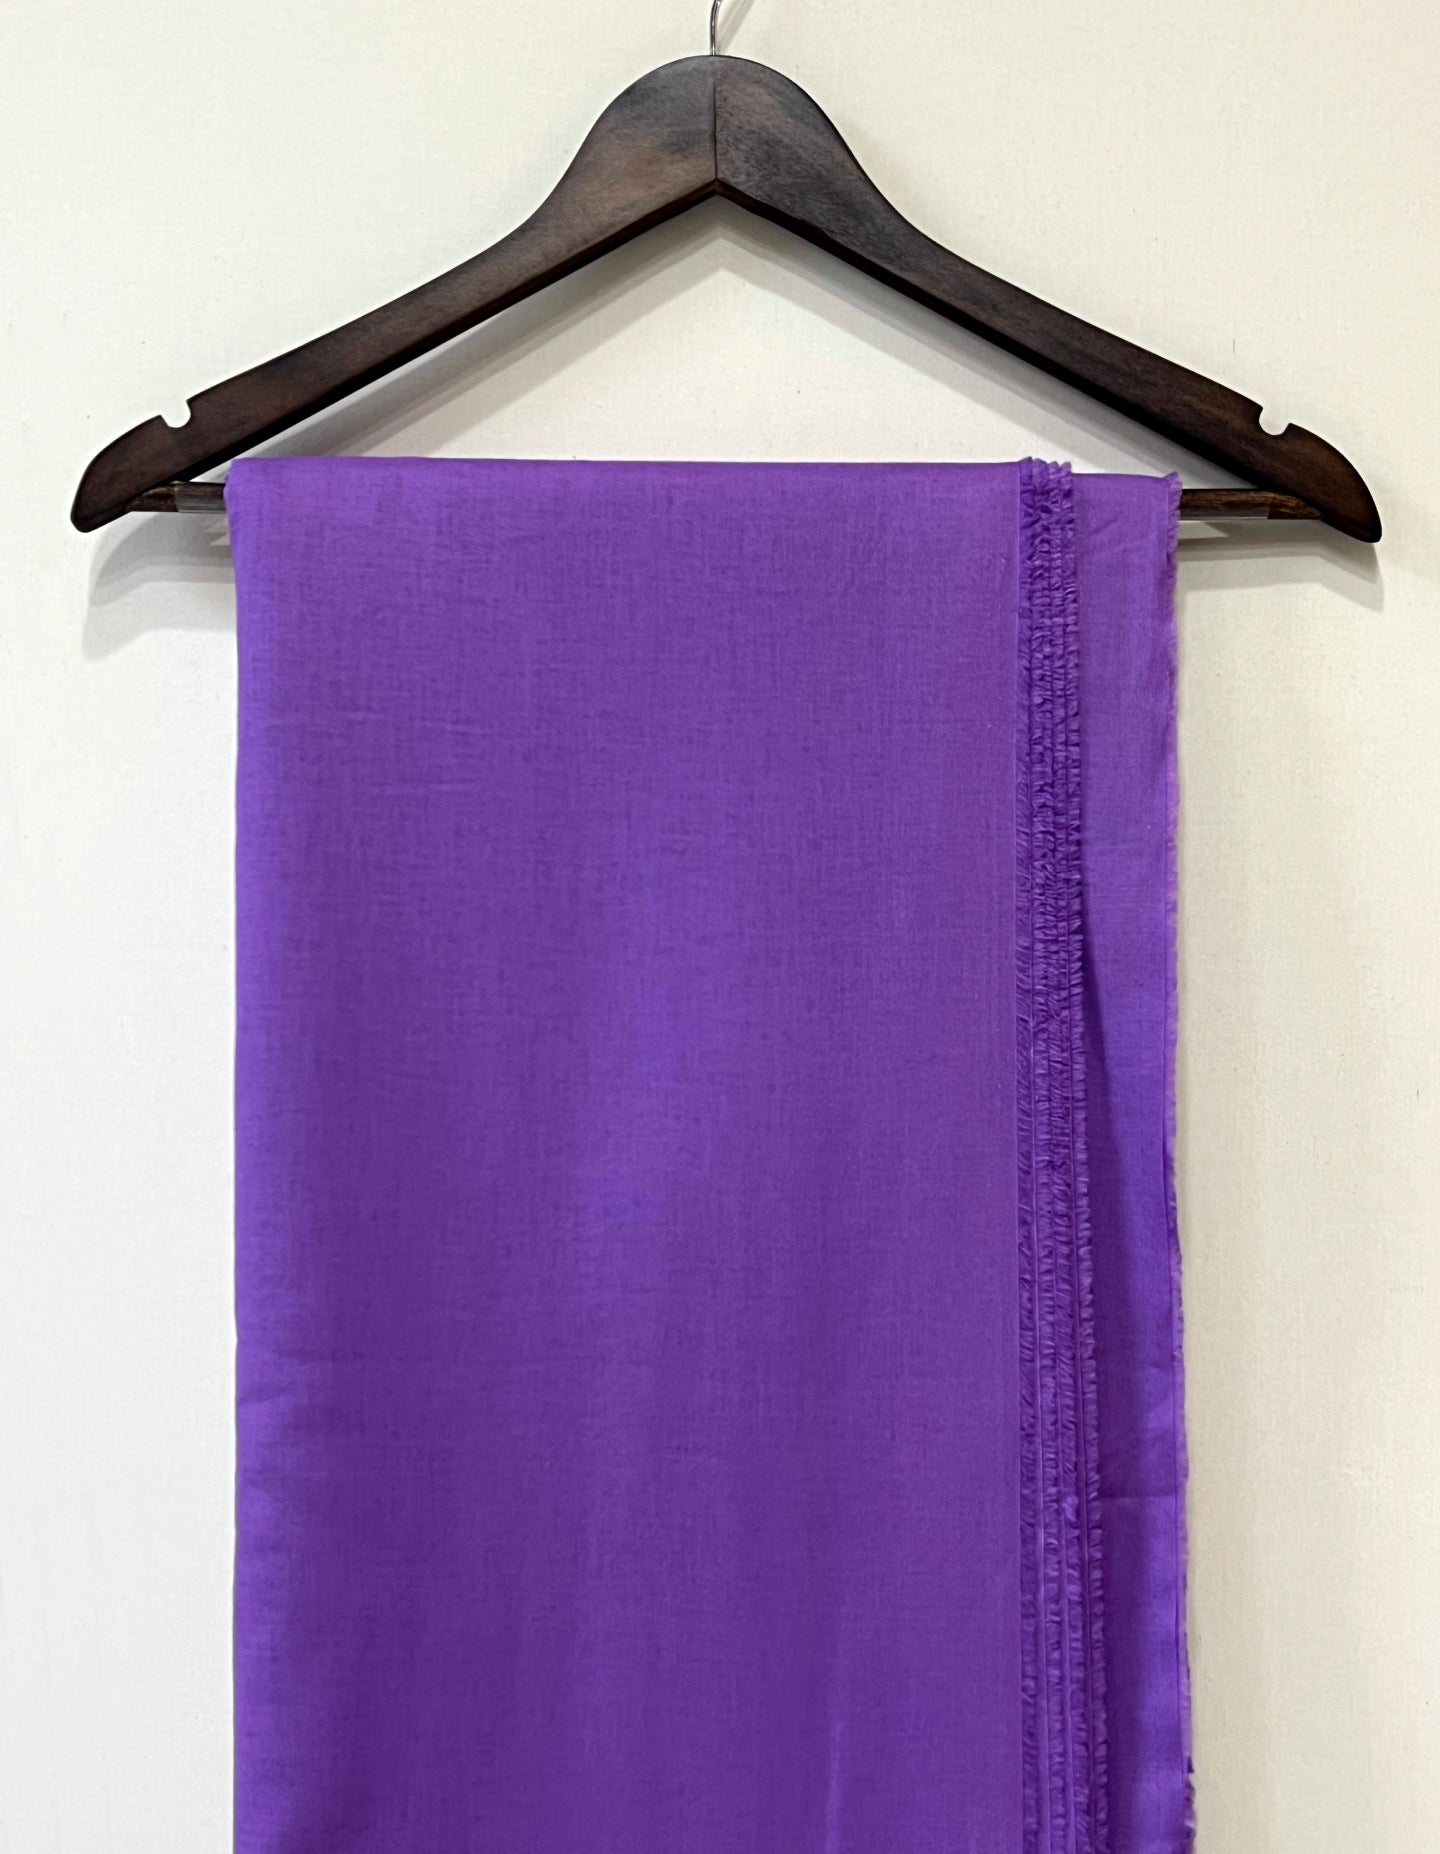 Sample Fabric: Purple Panther Cotton Linen